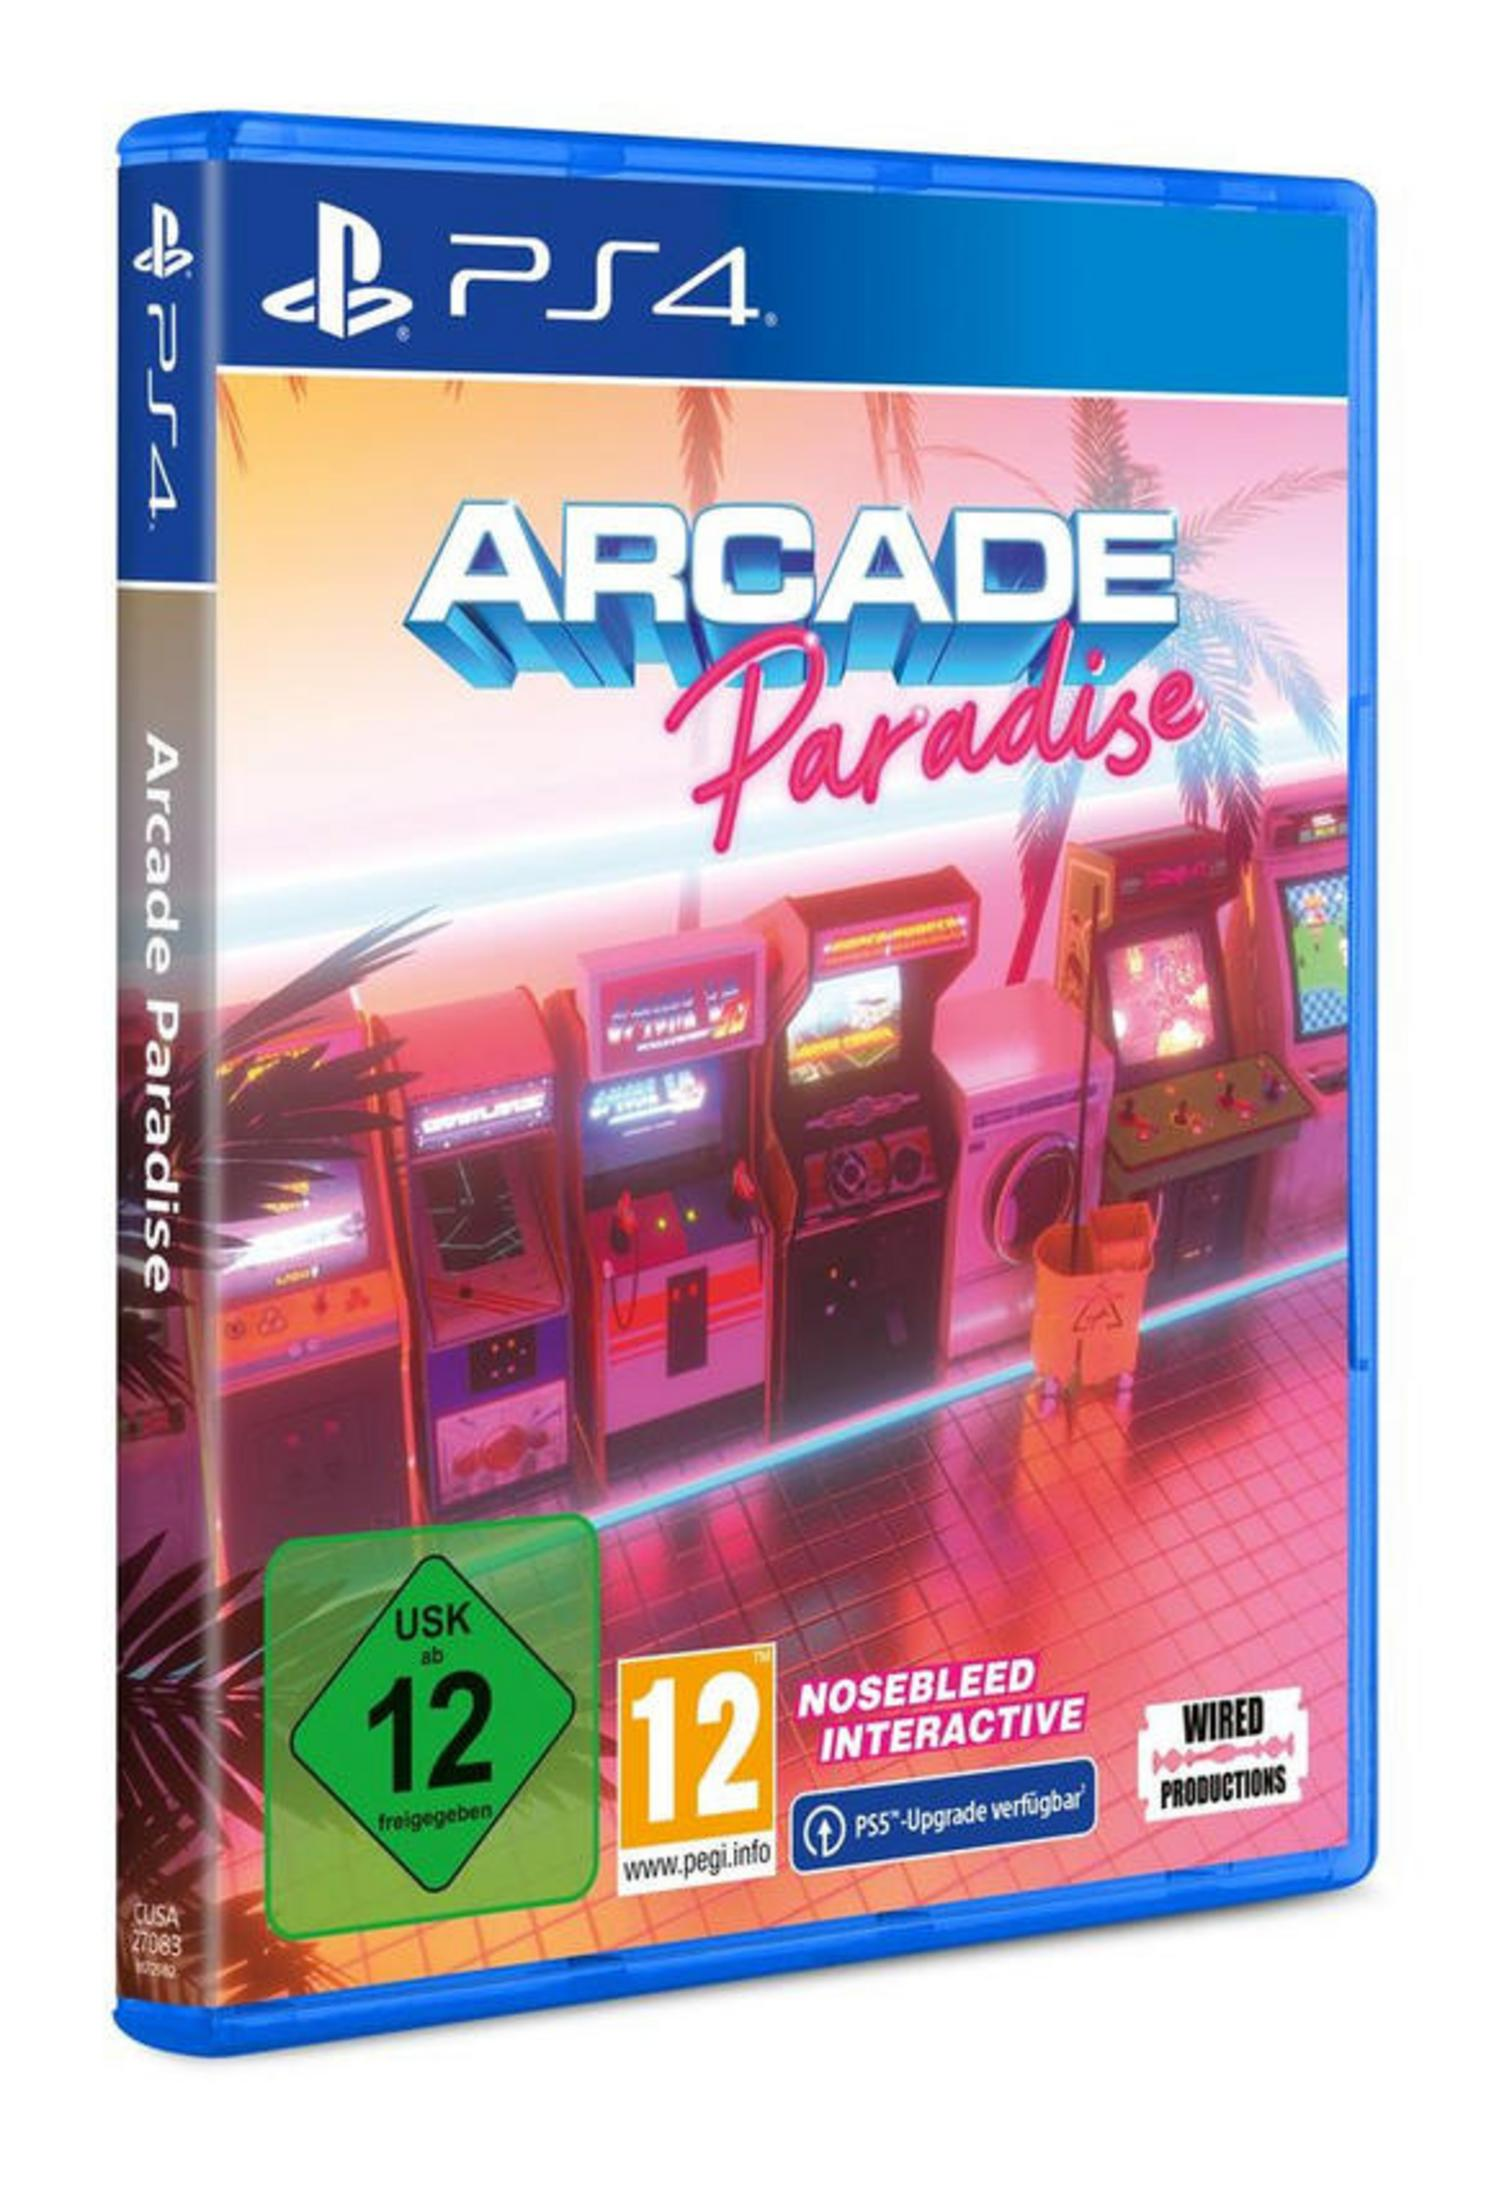 PS4 PARADISE ARCADE - [PlayStation 4